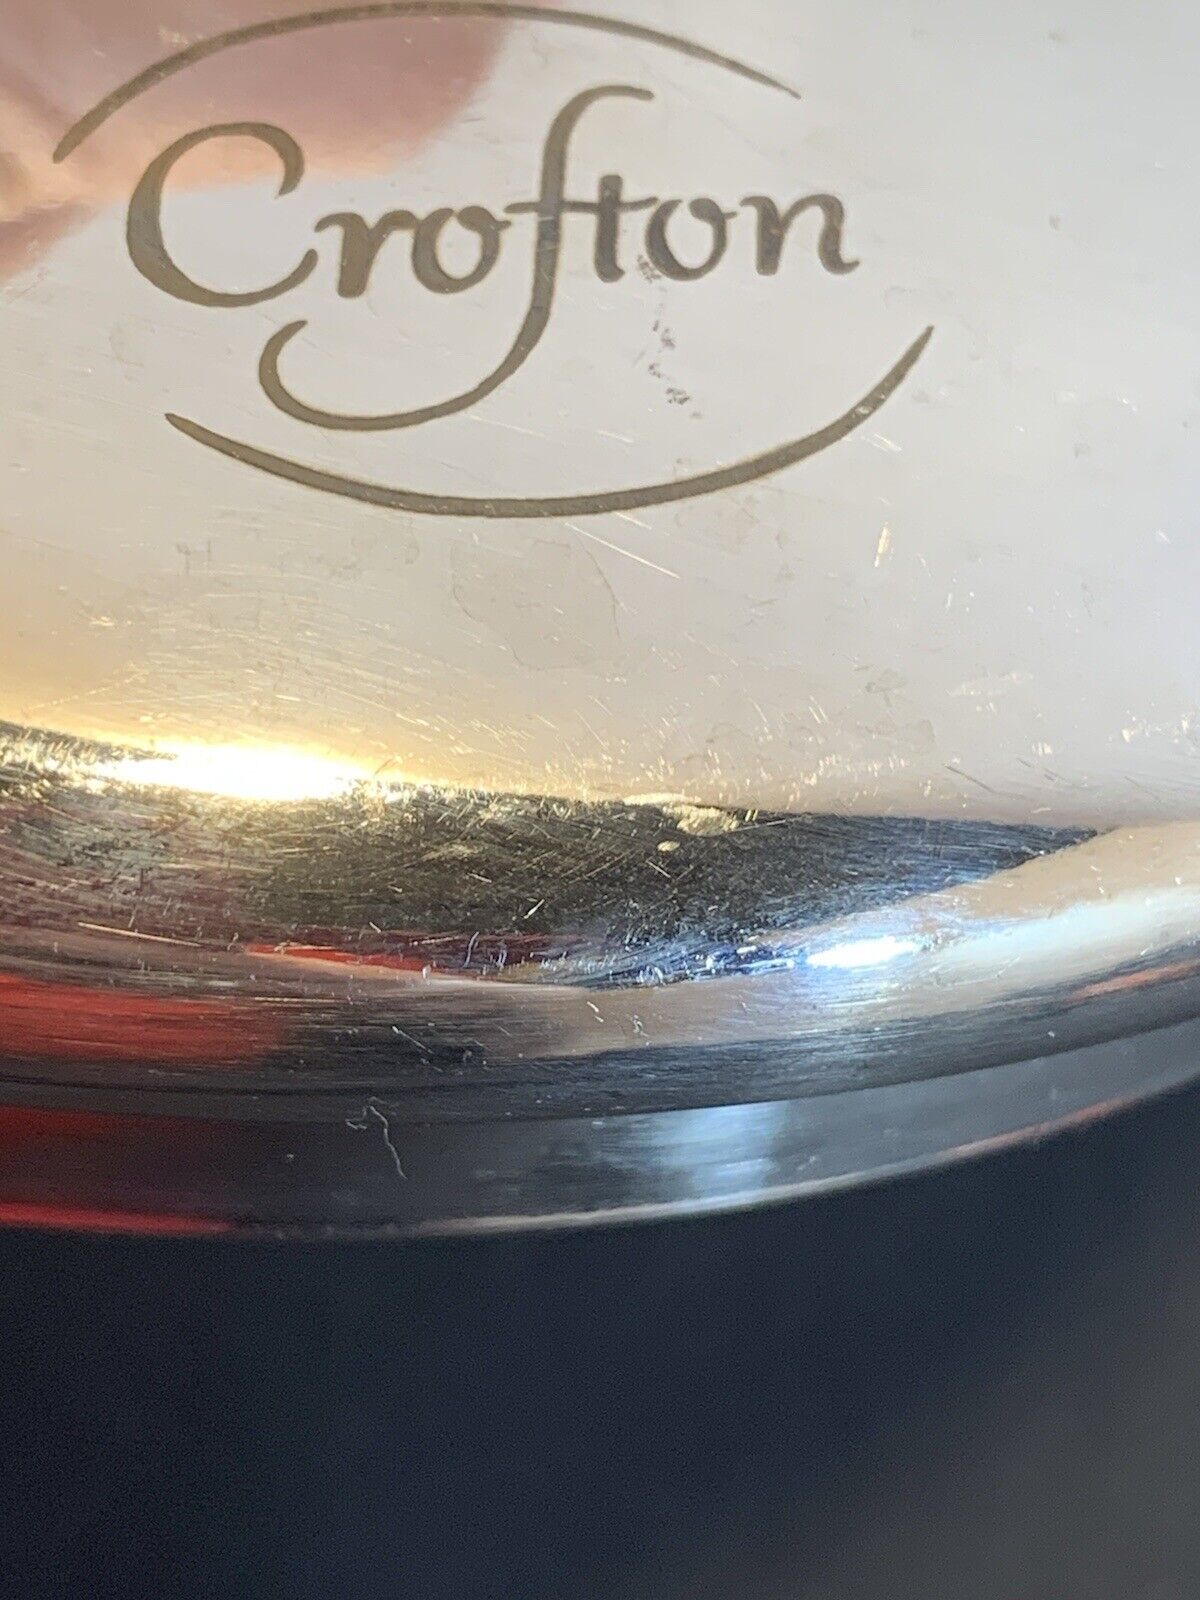 Crofton Silver Pot Replacement Lid 20 in Handle Round Silverware Kitchenware    eBay